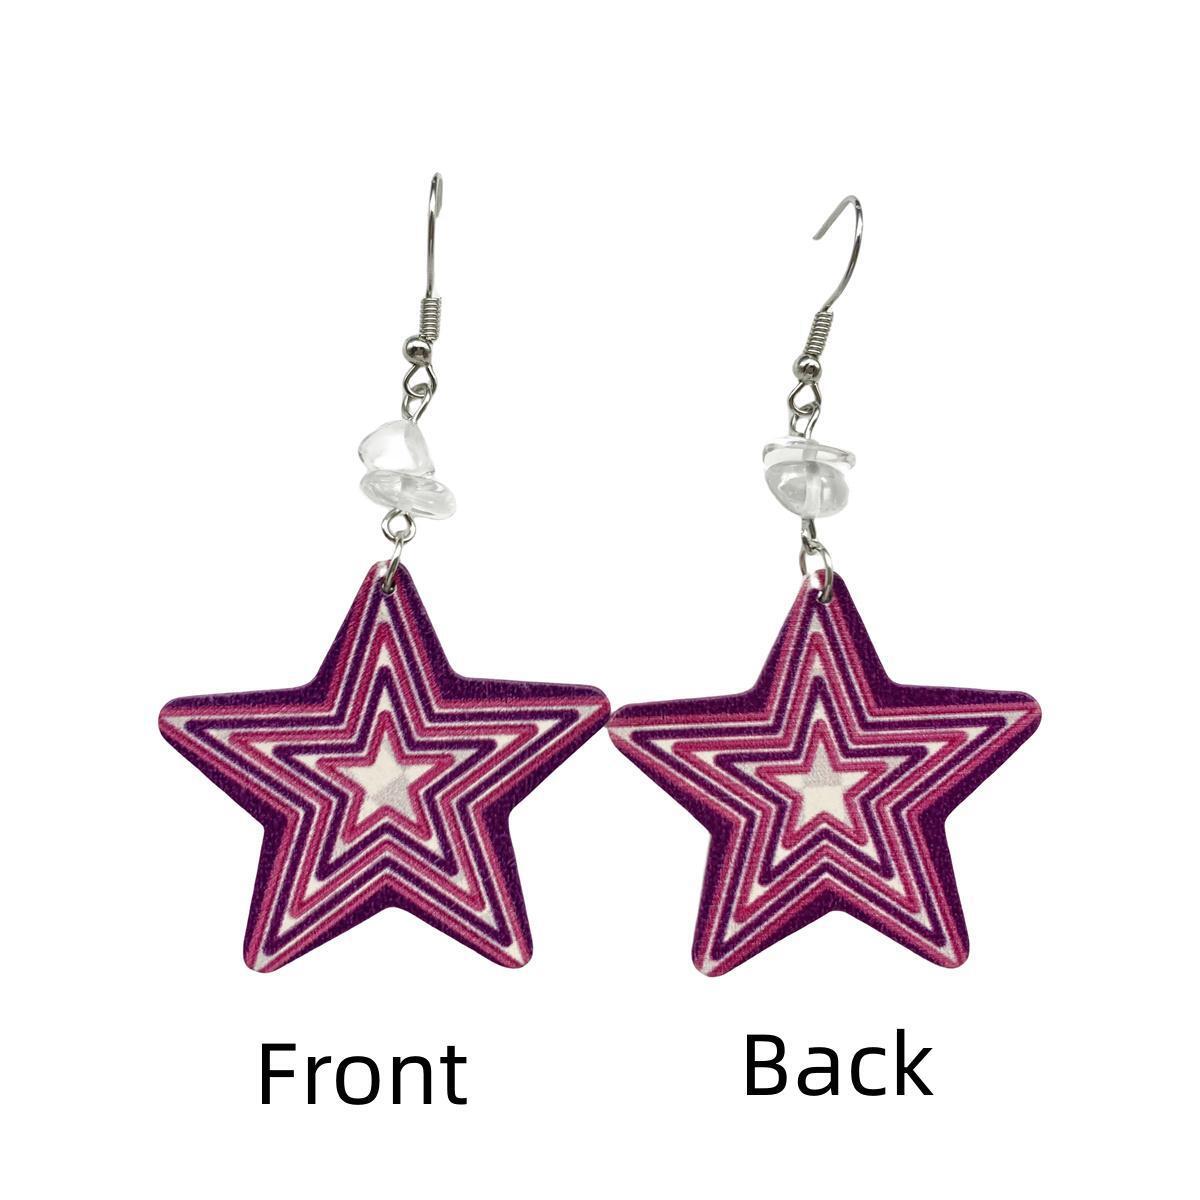 Accessories Five-pointed Star Wind Personalized Eardrops Earrings